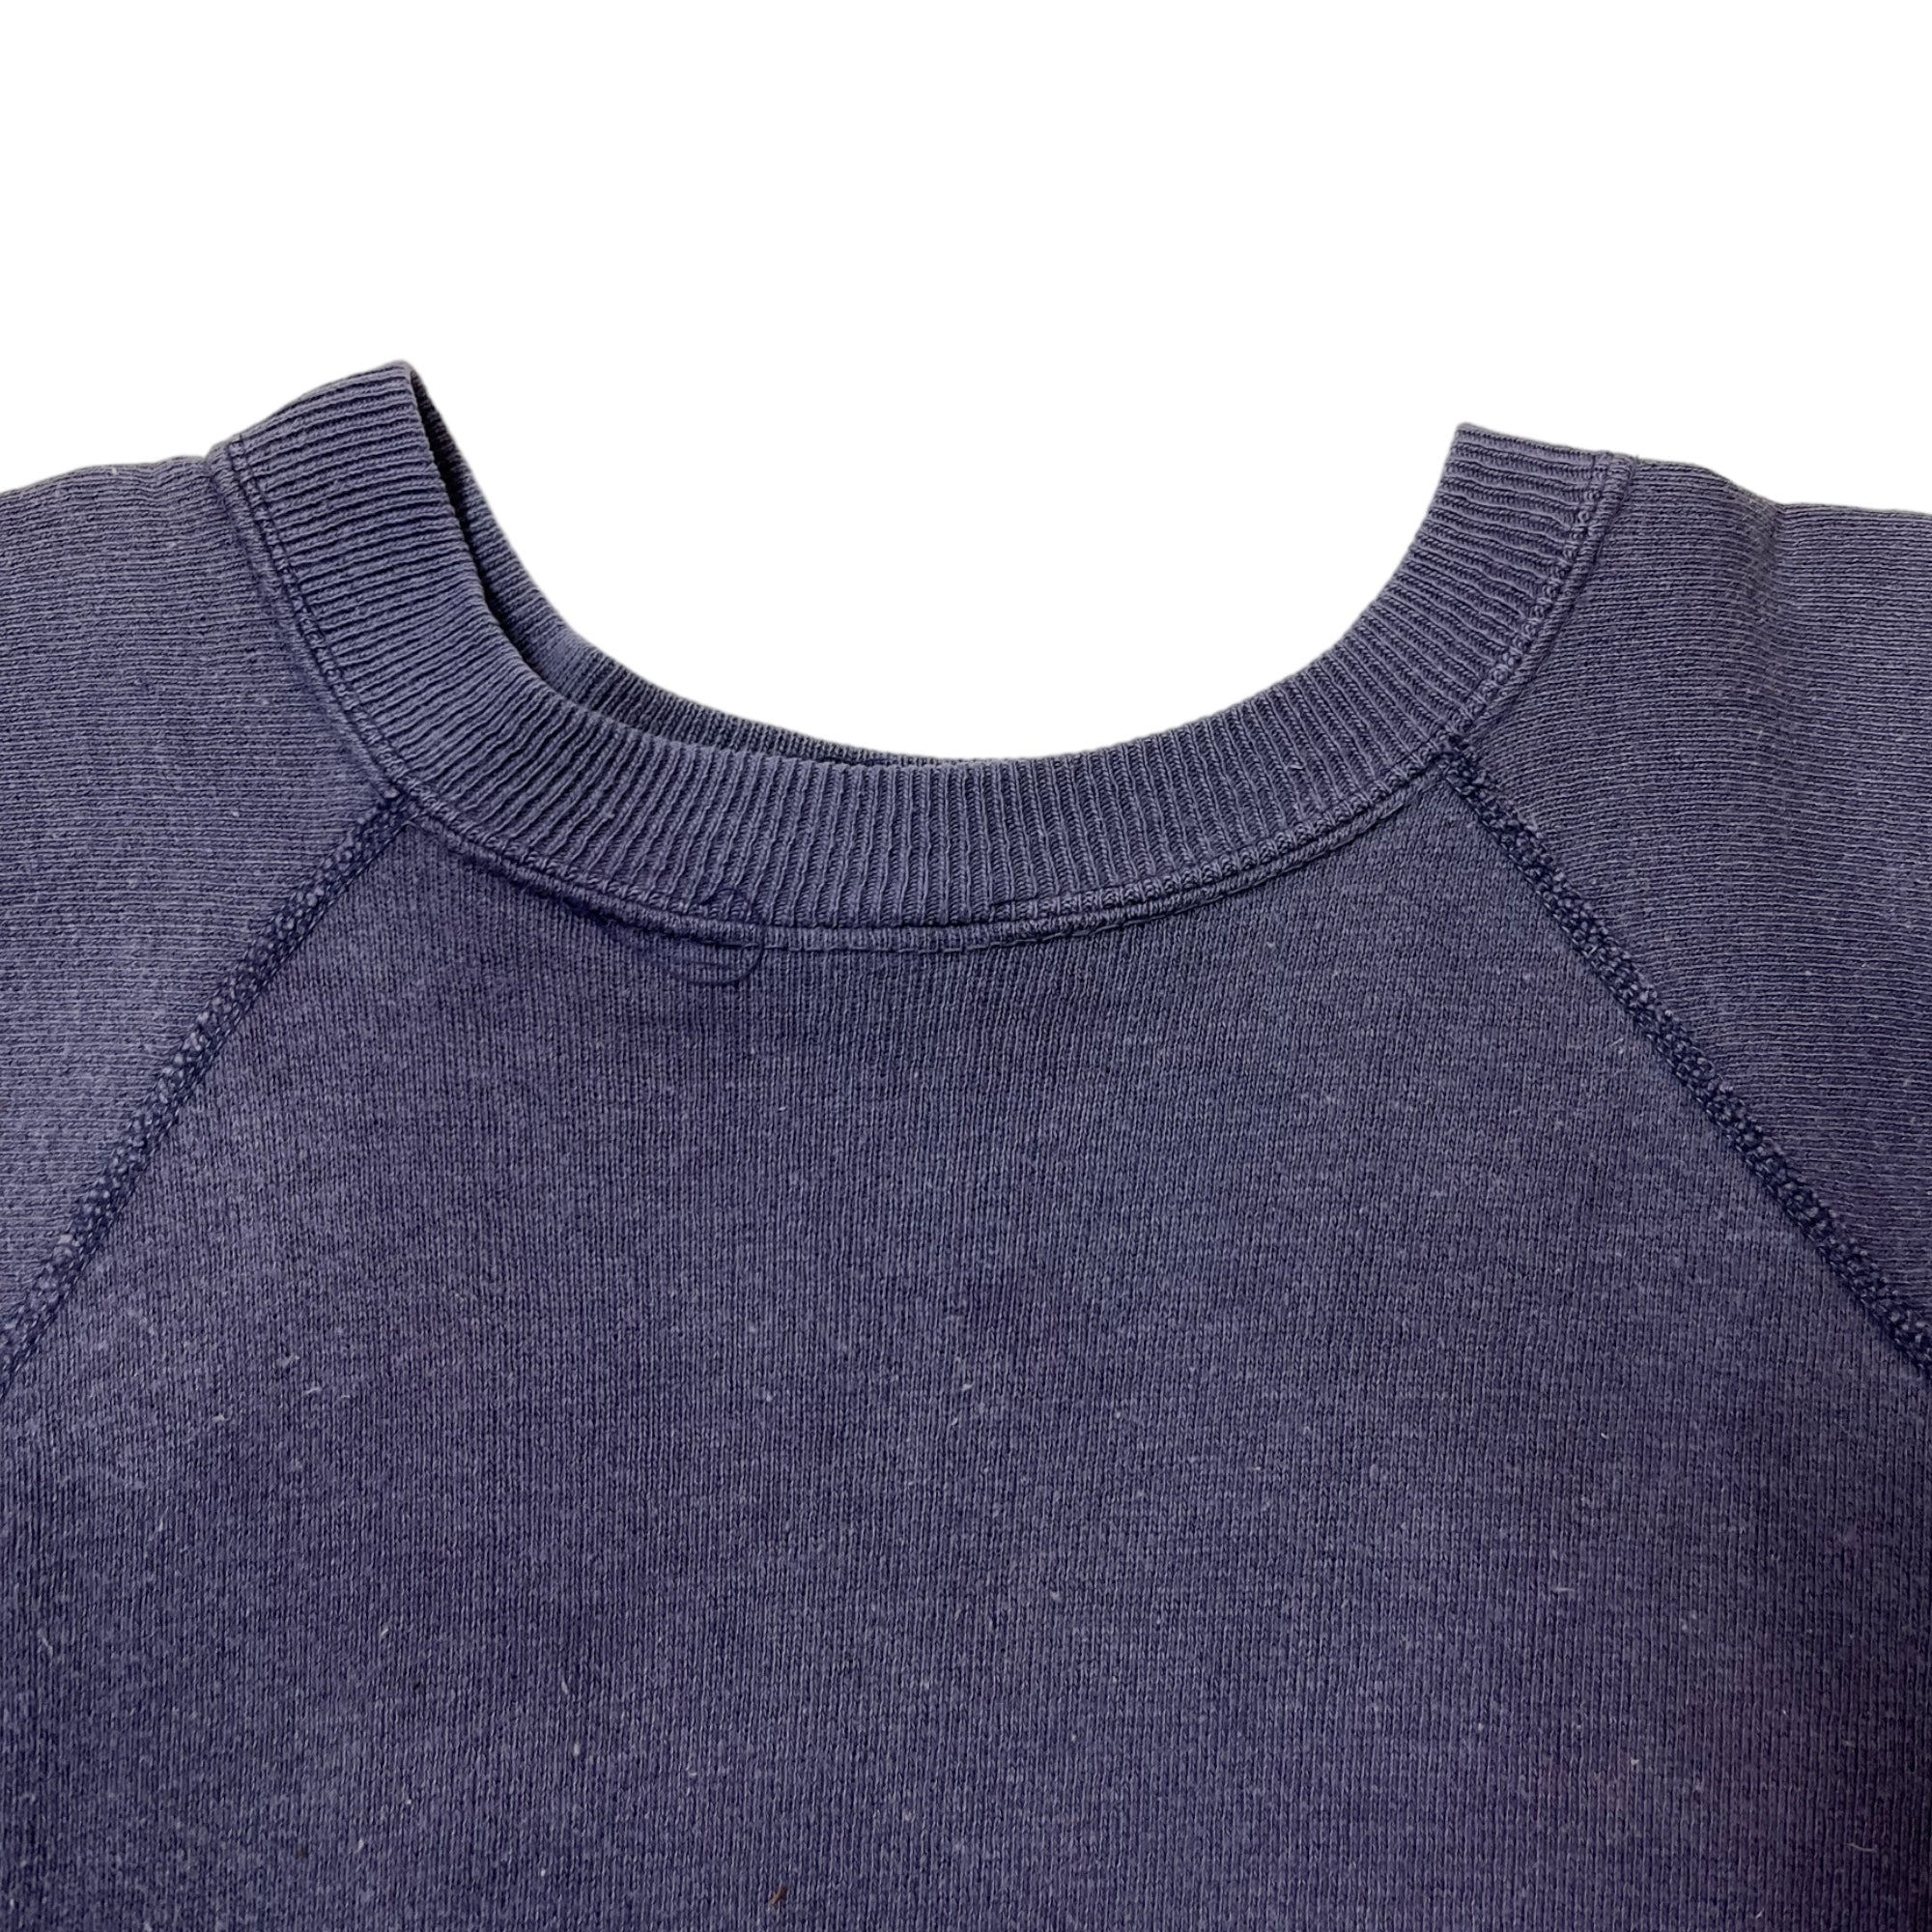 1970s Pennys Short-Sleeve Raglan Sweatshirt - Faded Black/Navy - M